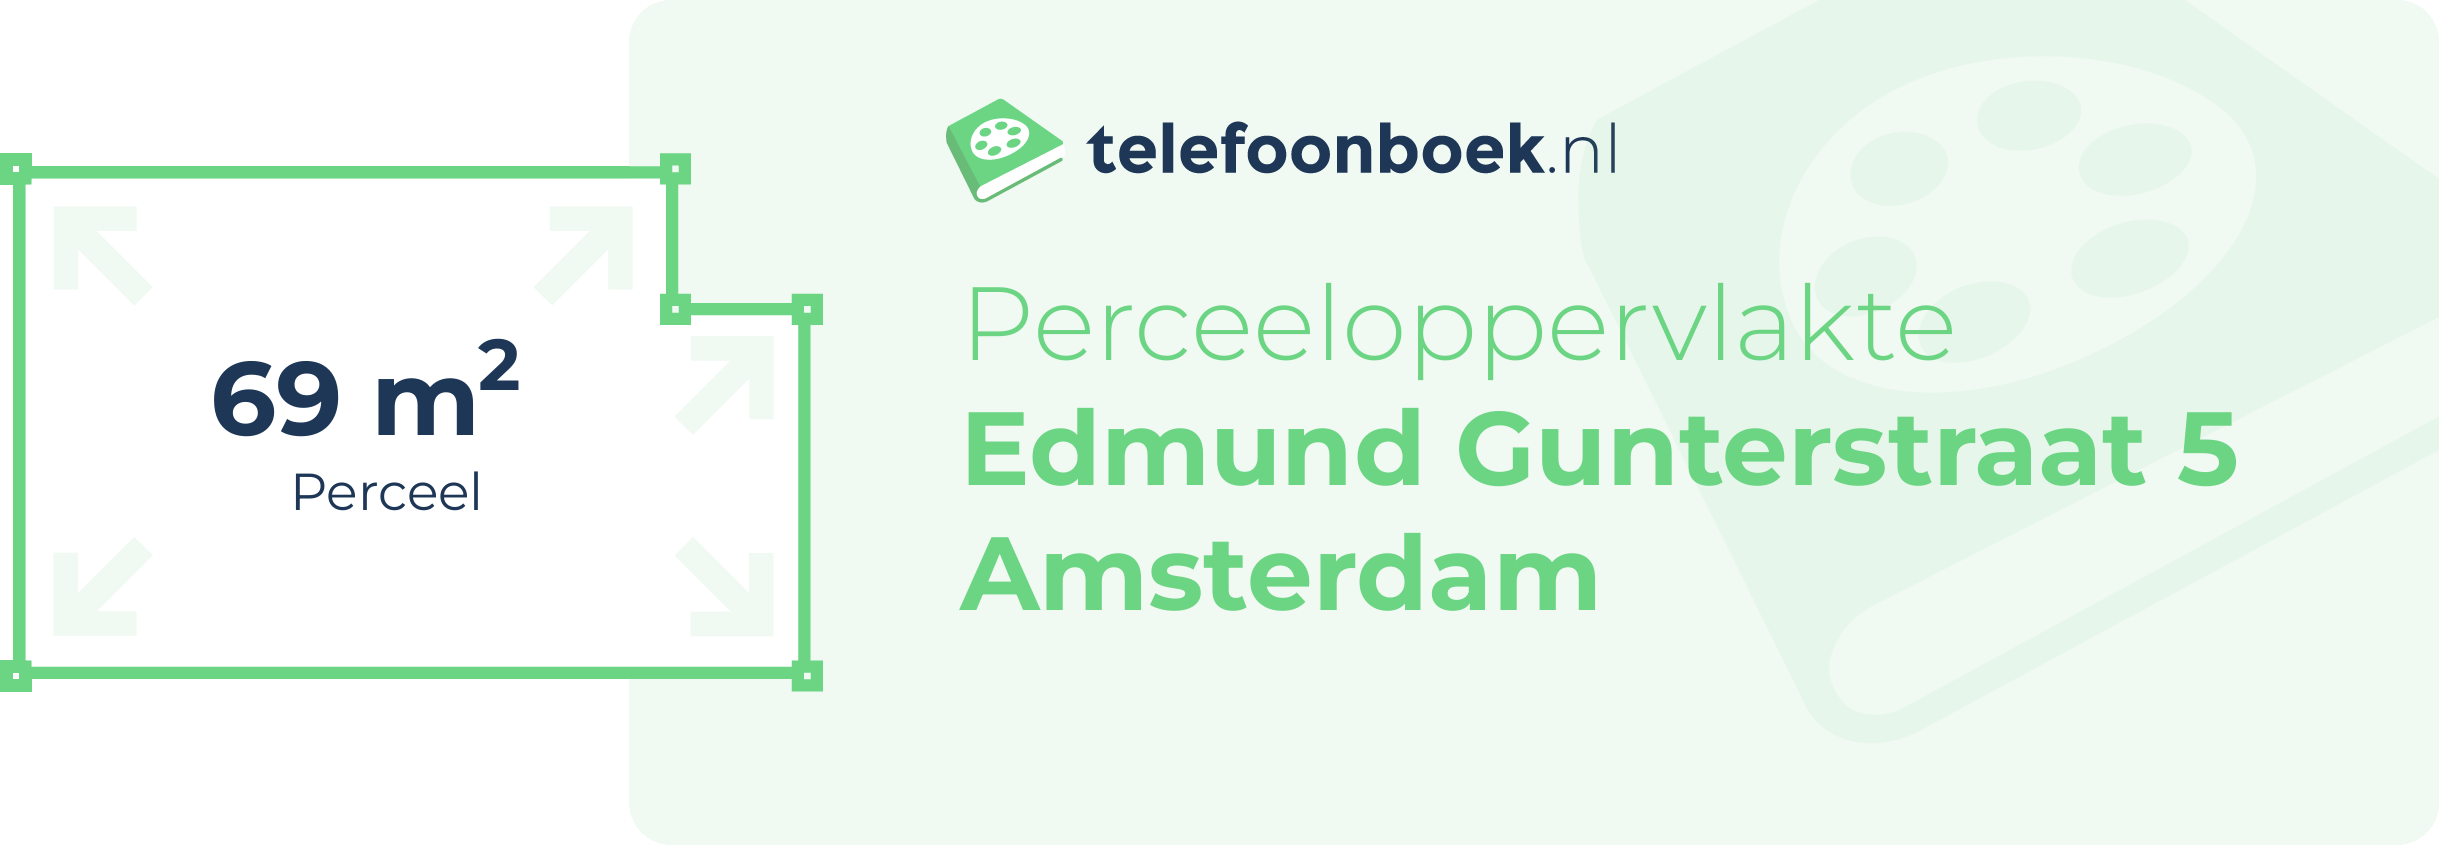 Perceeloppervlakte Edmund Gunterstraat 5 Amsterdam